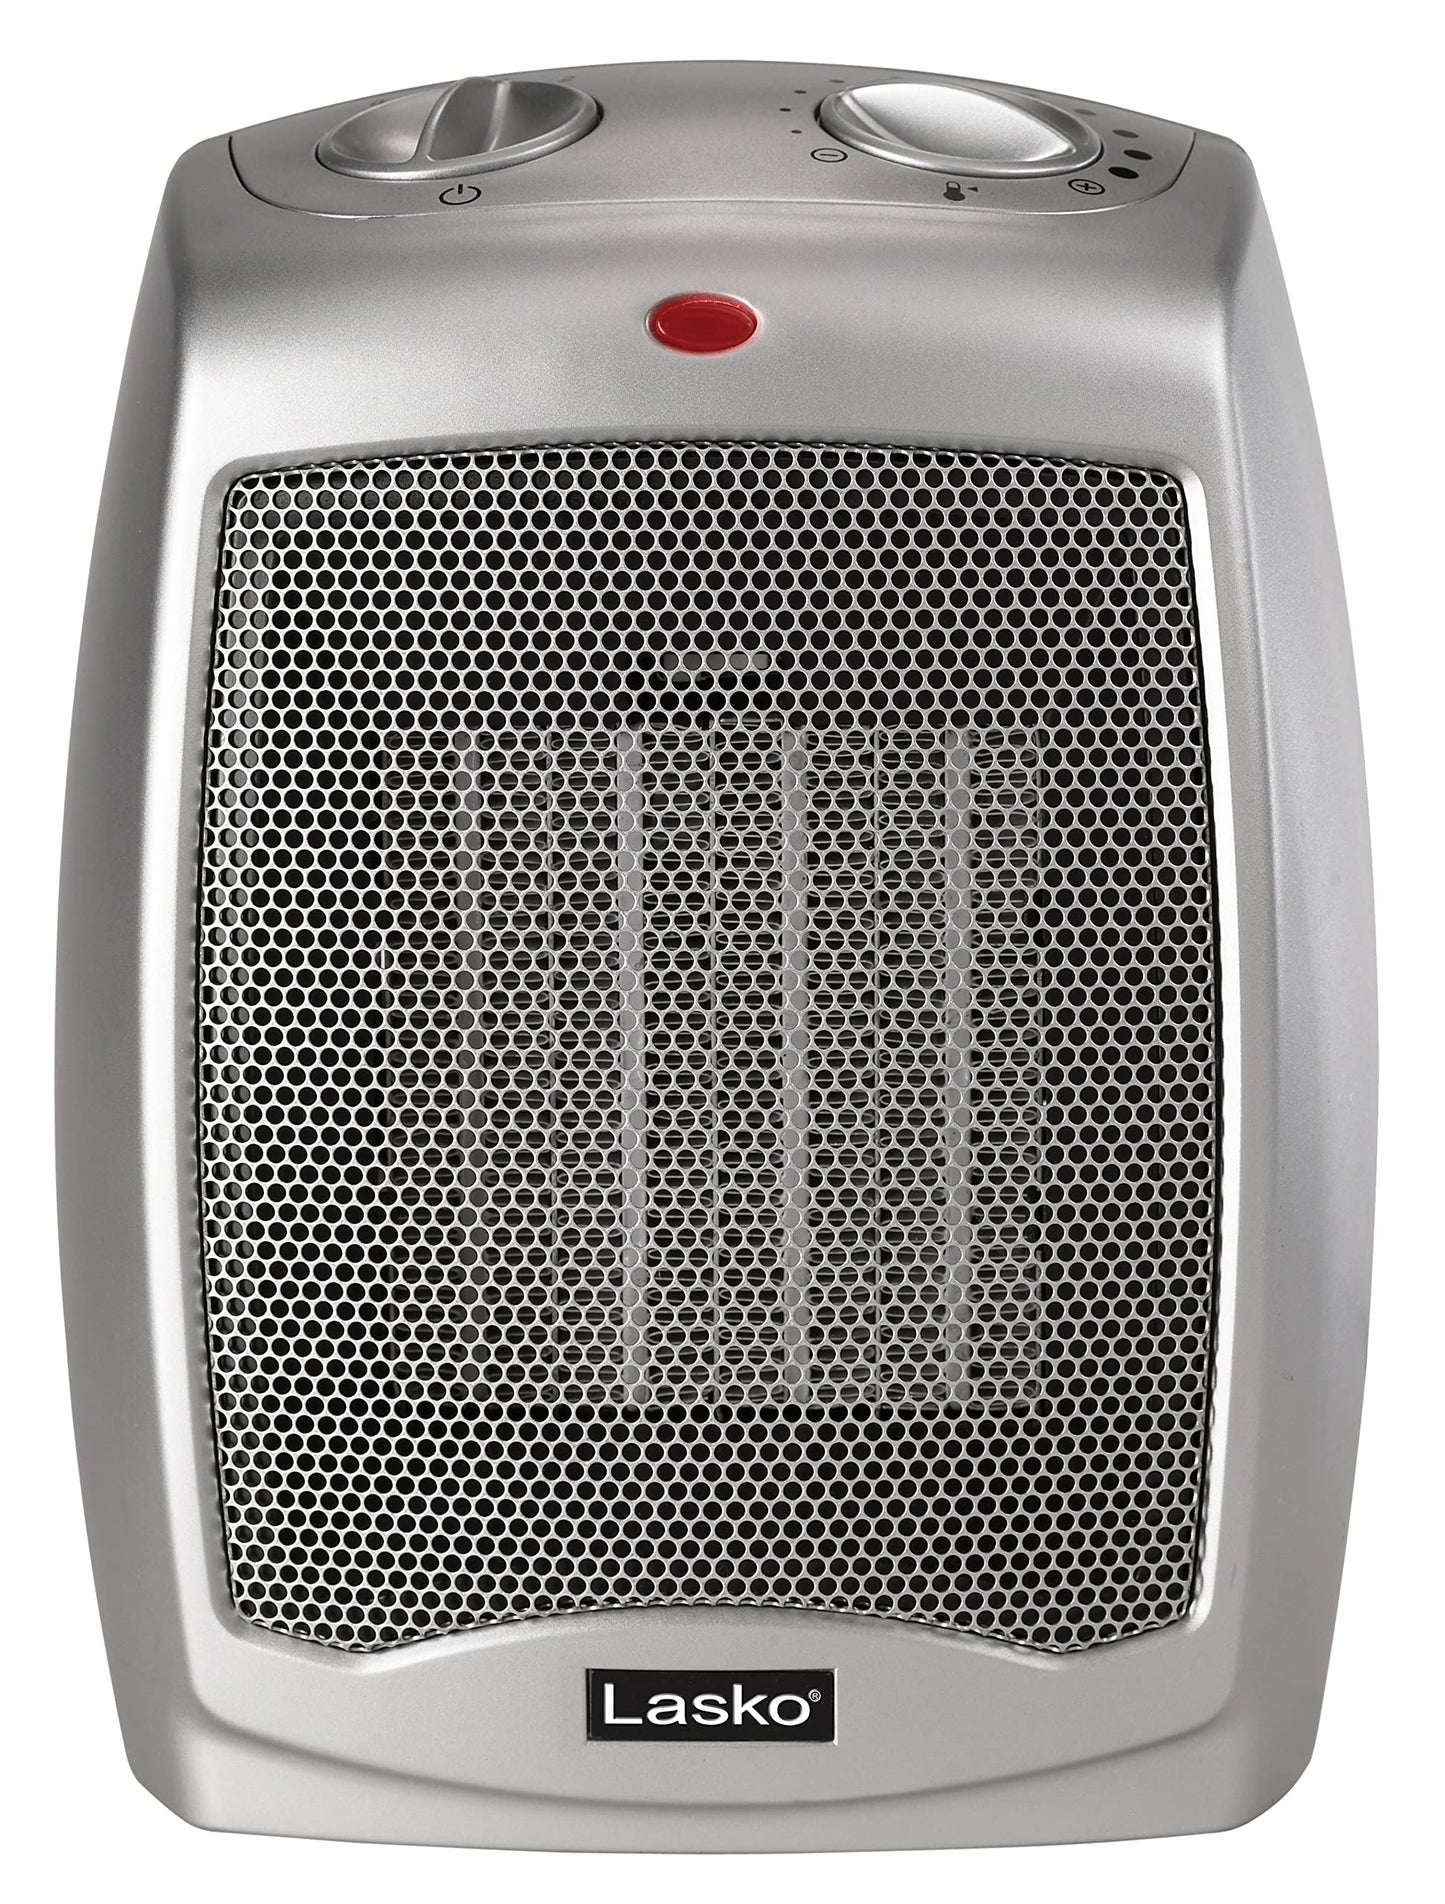 Lasko Ceramic Adjustable Thermostat Space Heaters, Non-Oscillating, 754200 Silver - Like New